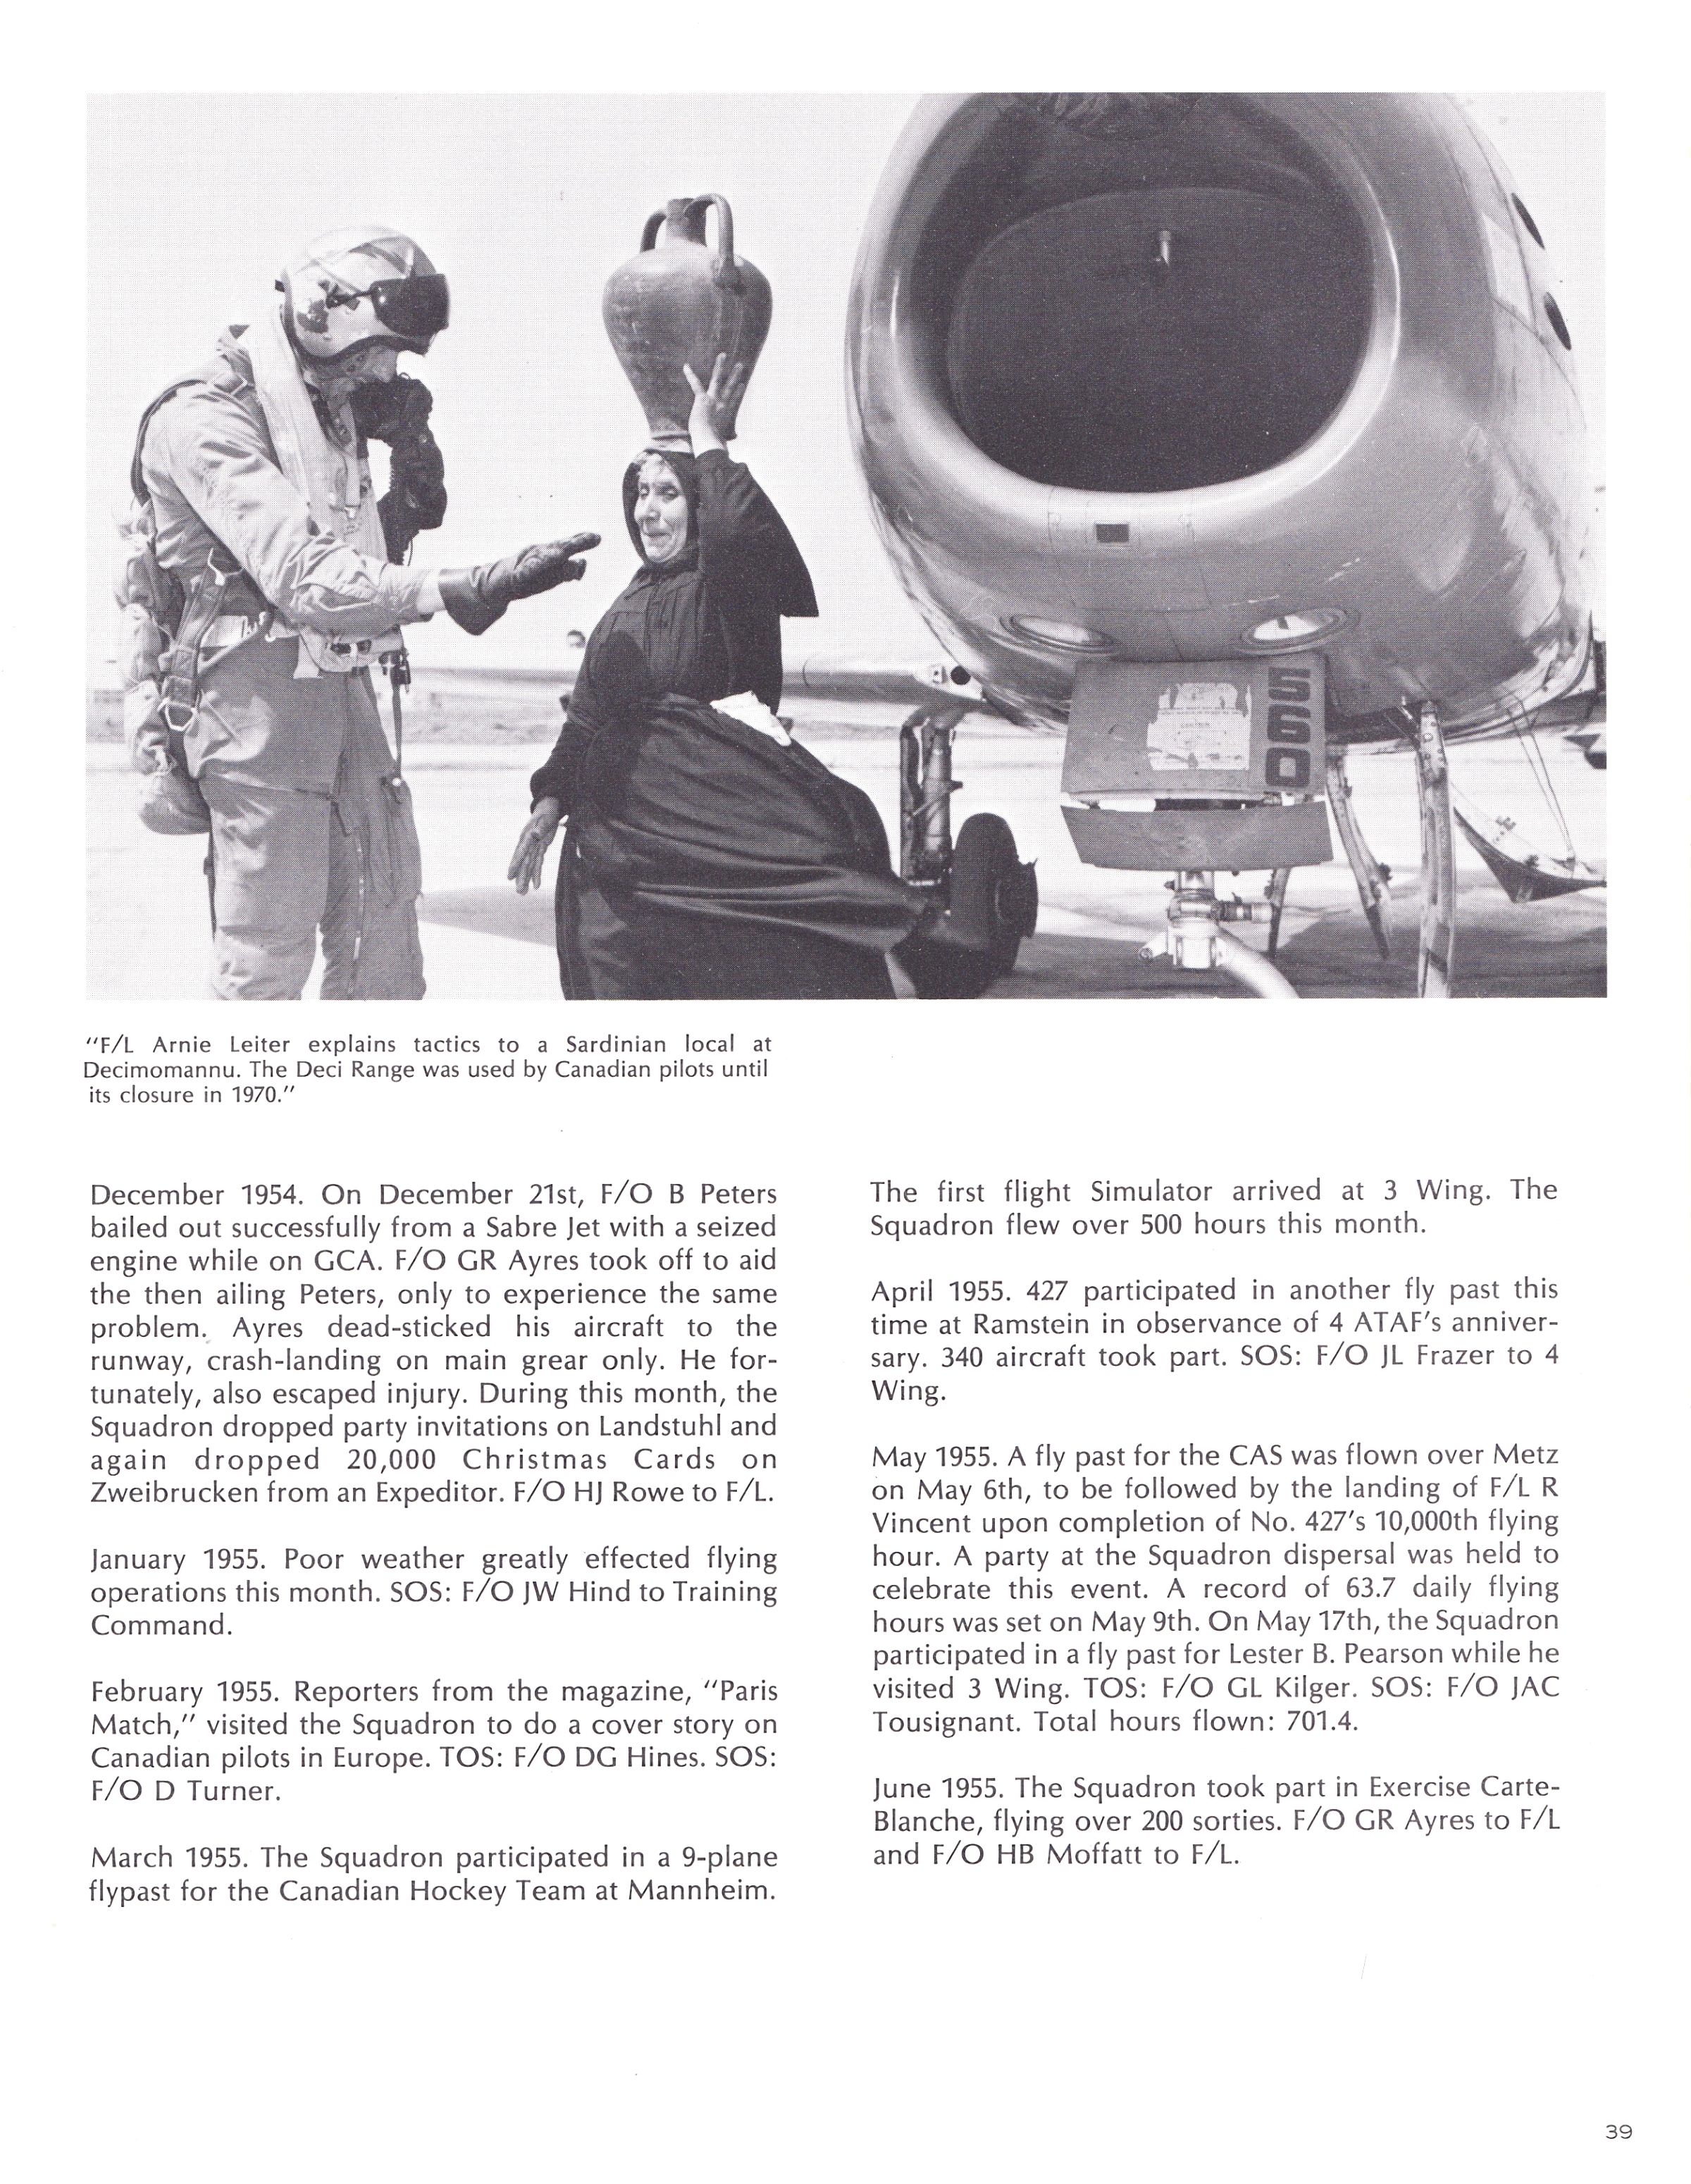 Squadron Sabre diary 1952-1957